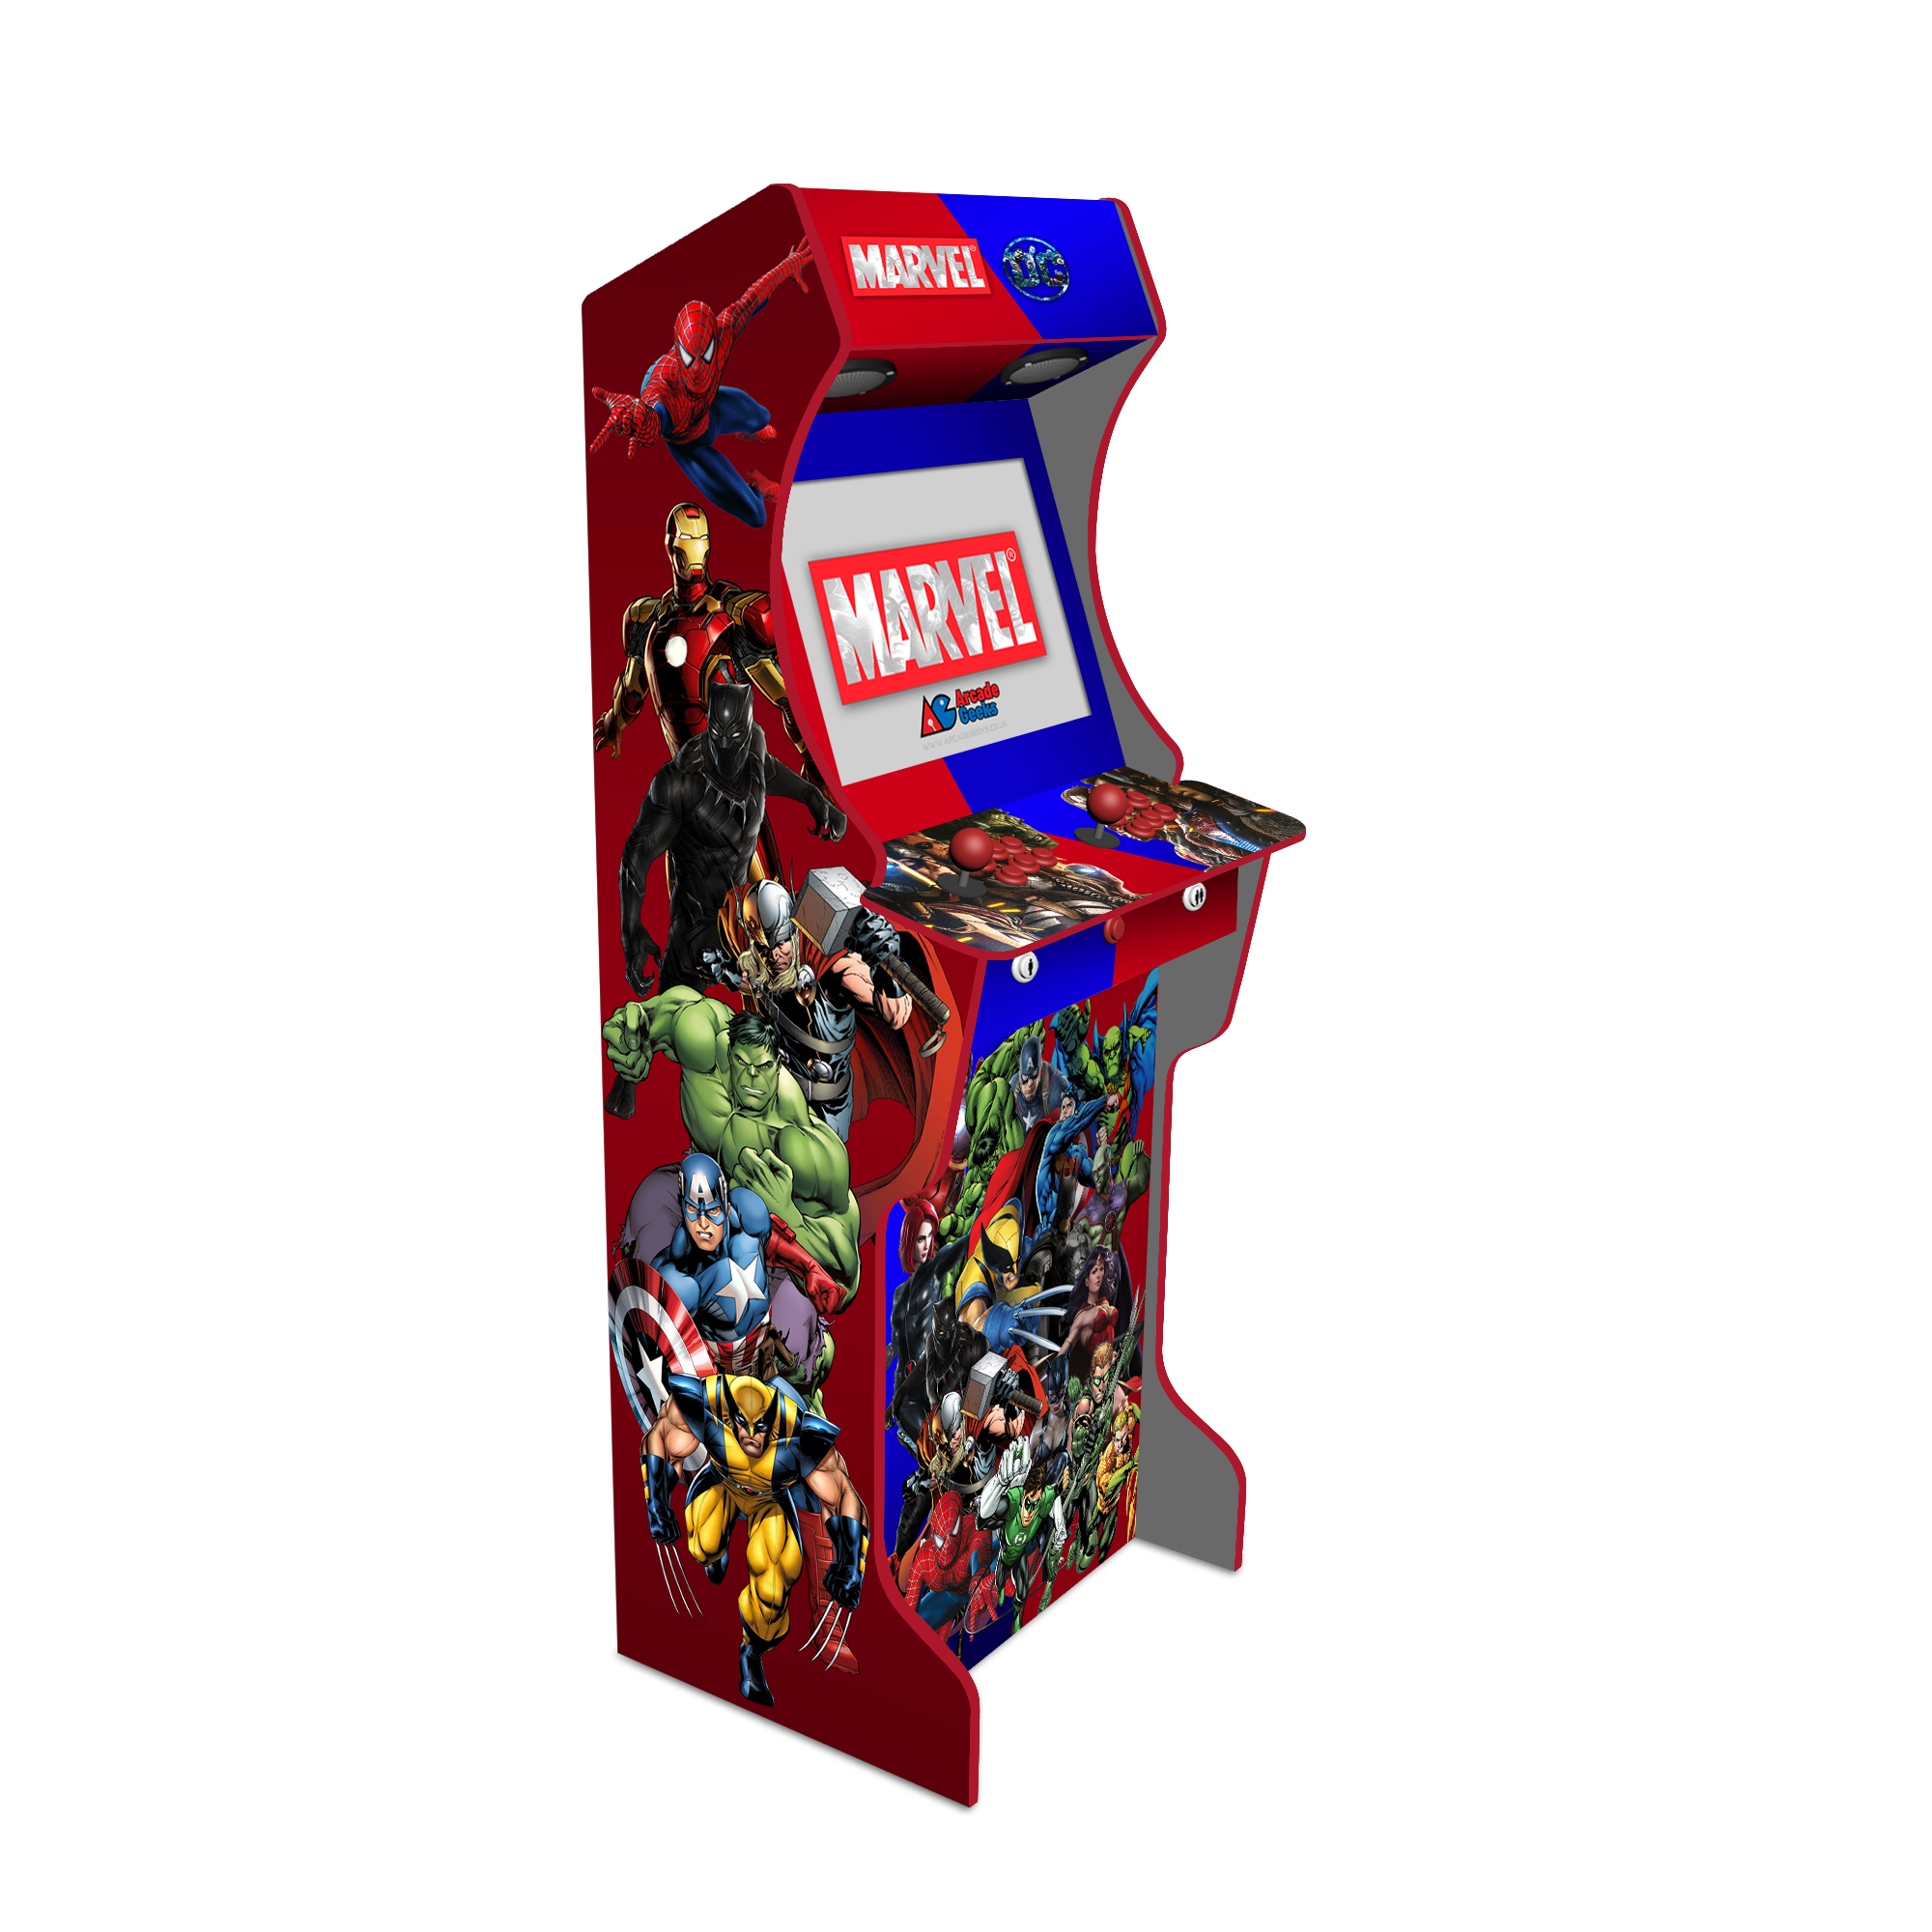 AG Elite 2 Player Arcade Machine - Marvel vs DC - Top Spec